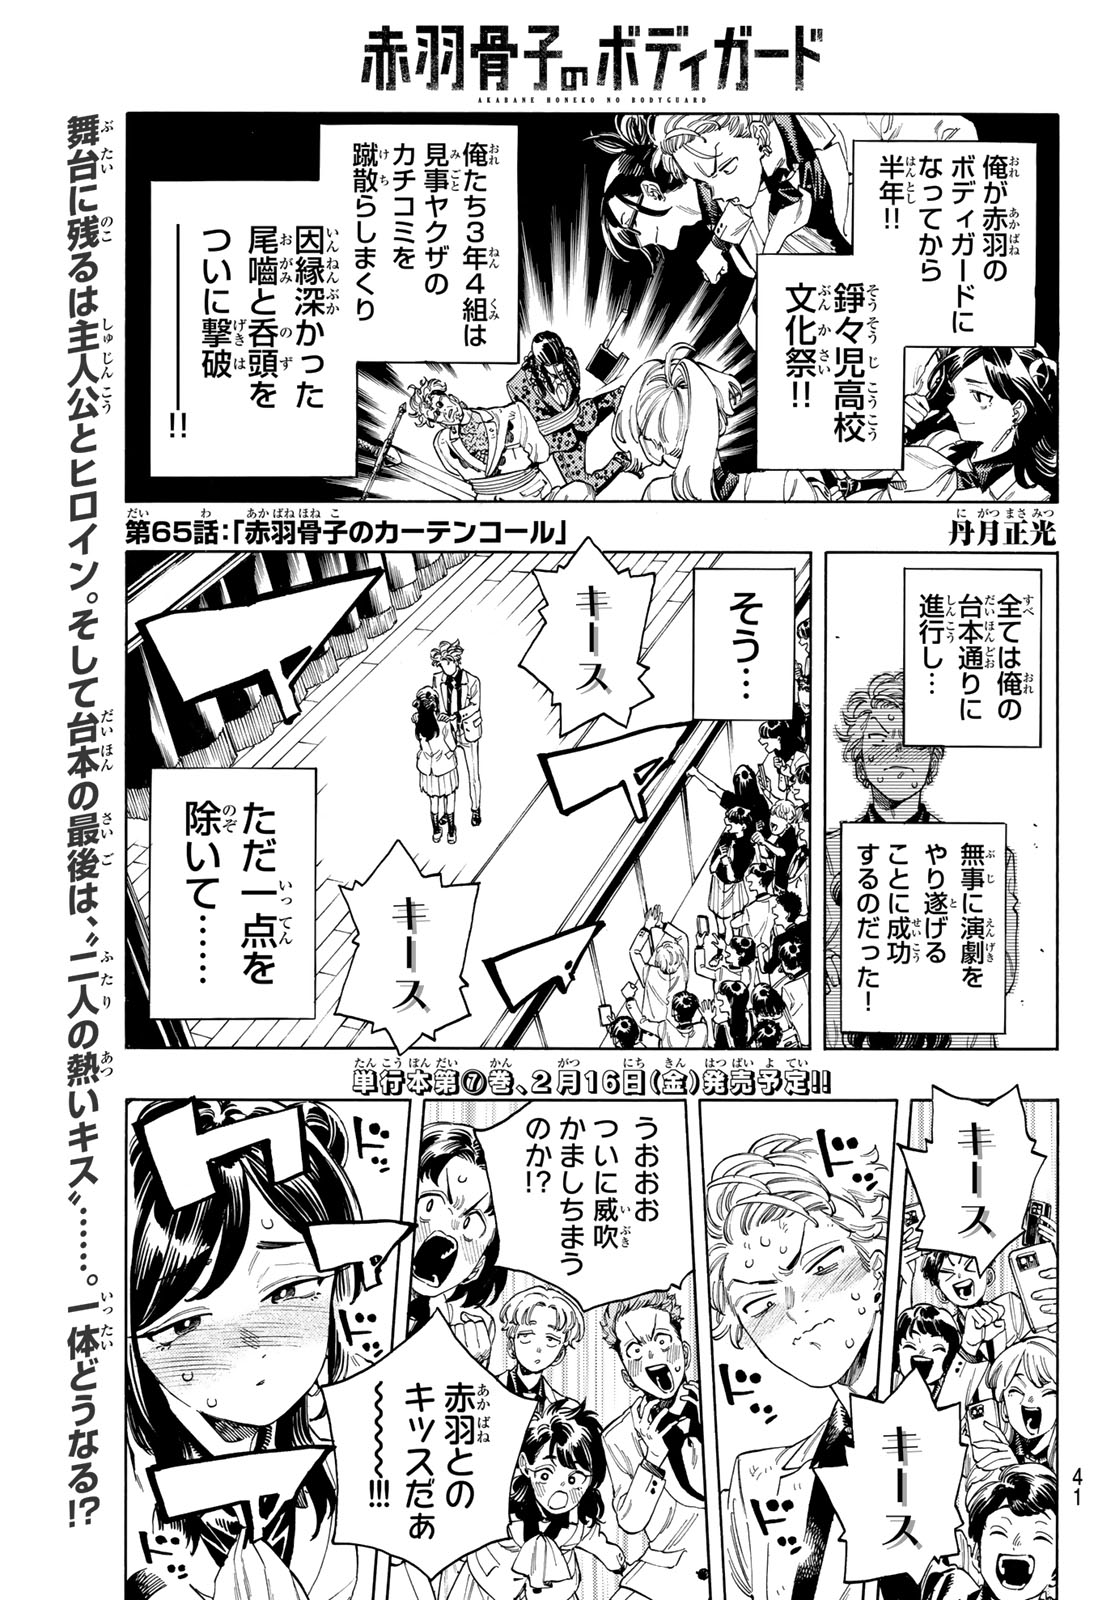 Akabane Honeko no Bodyguard - Chapter 65 - Page 1